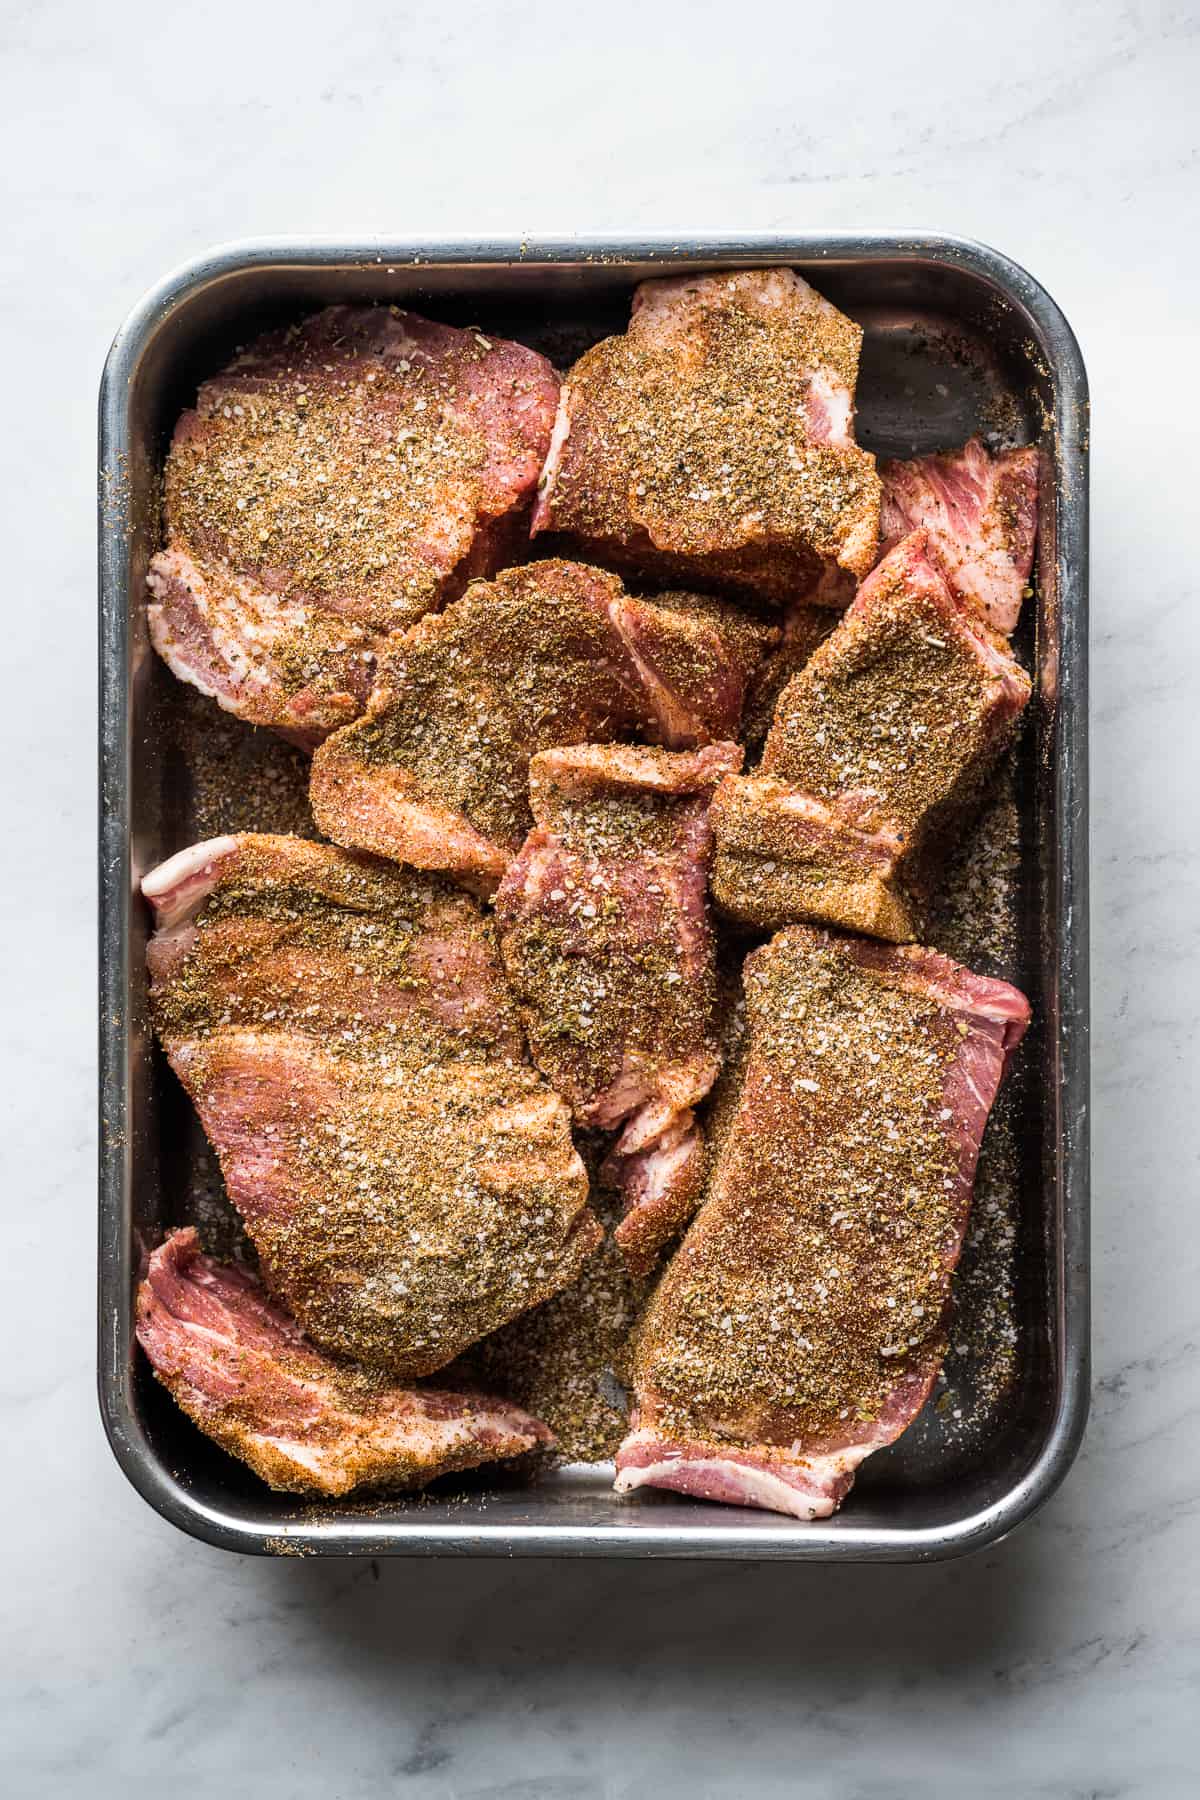 Seasoned pork shoulder cut into large chunks on a baking tray.